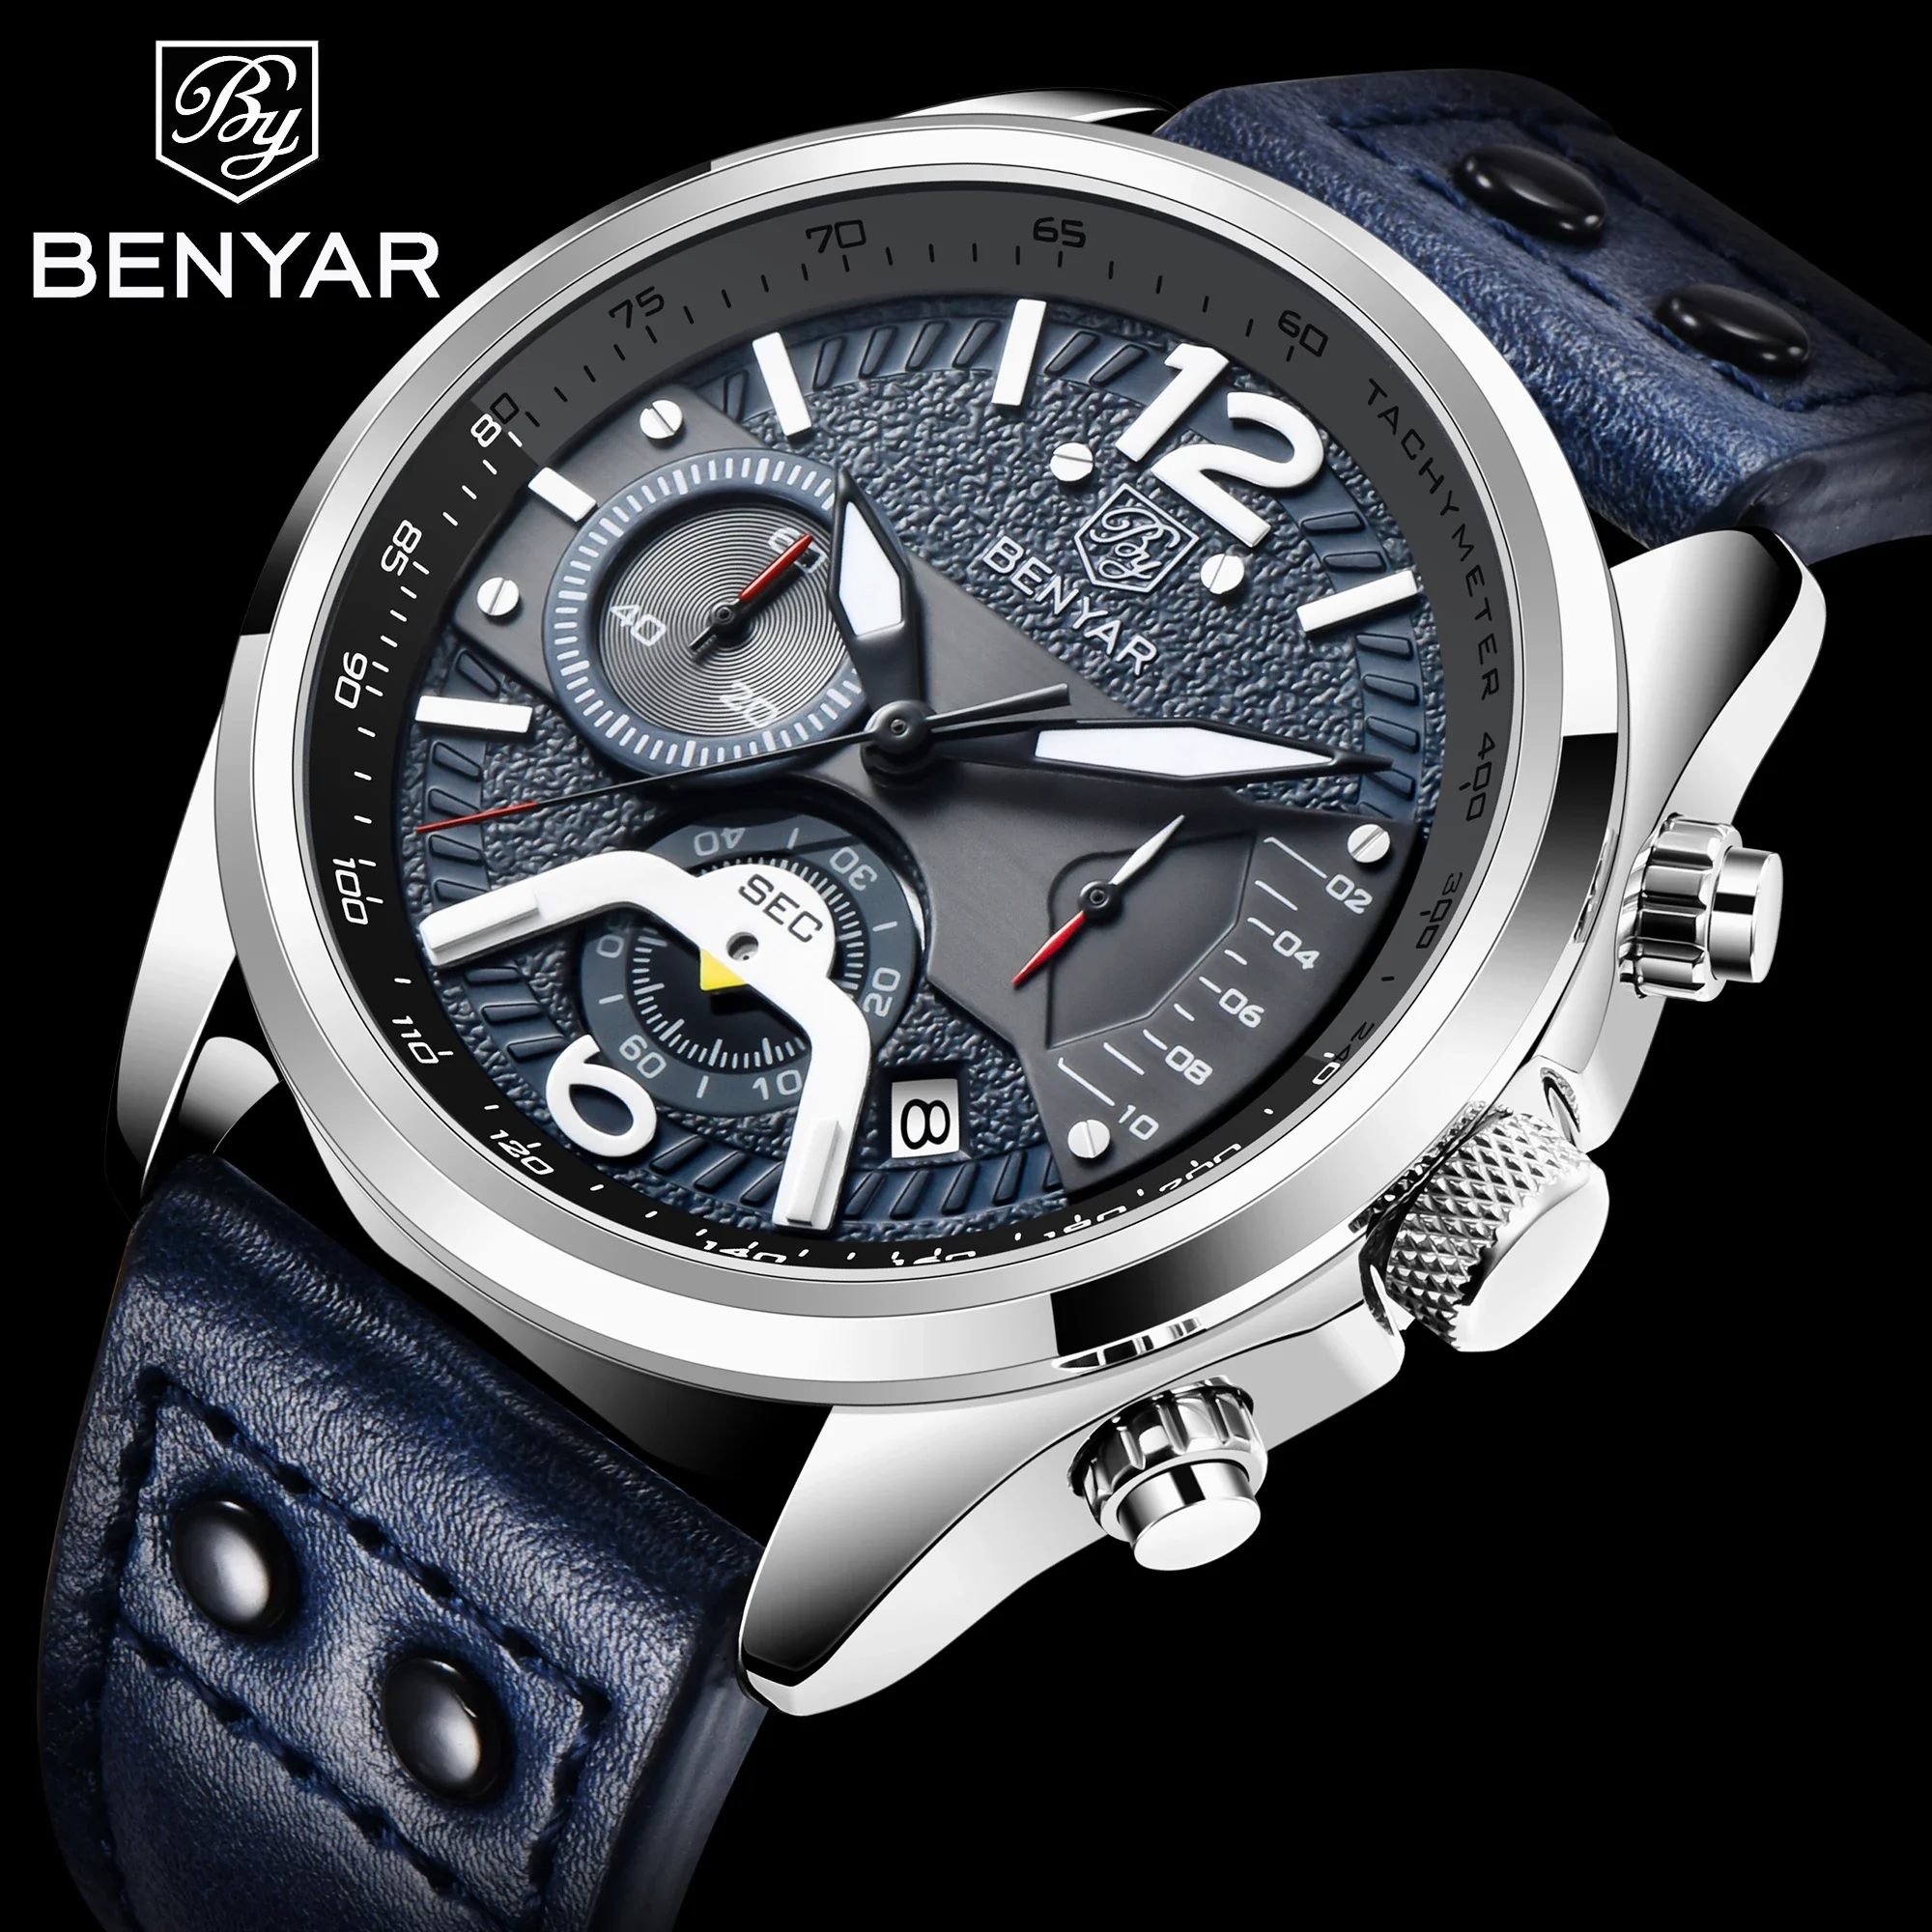 

BENYAR New Luxury Men Quartz Wristwatches Sports Waterproof Chronograph Watch Top Brand Leather Military Watch reloj hombre 5171, Shown